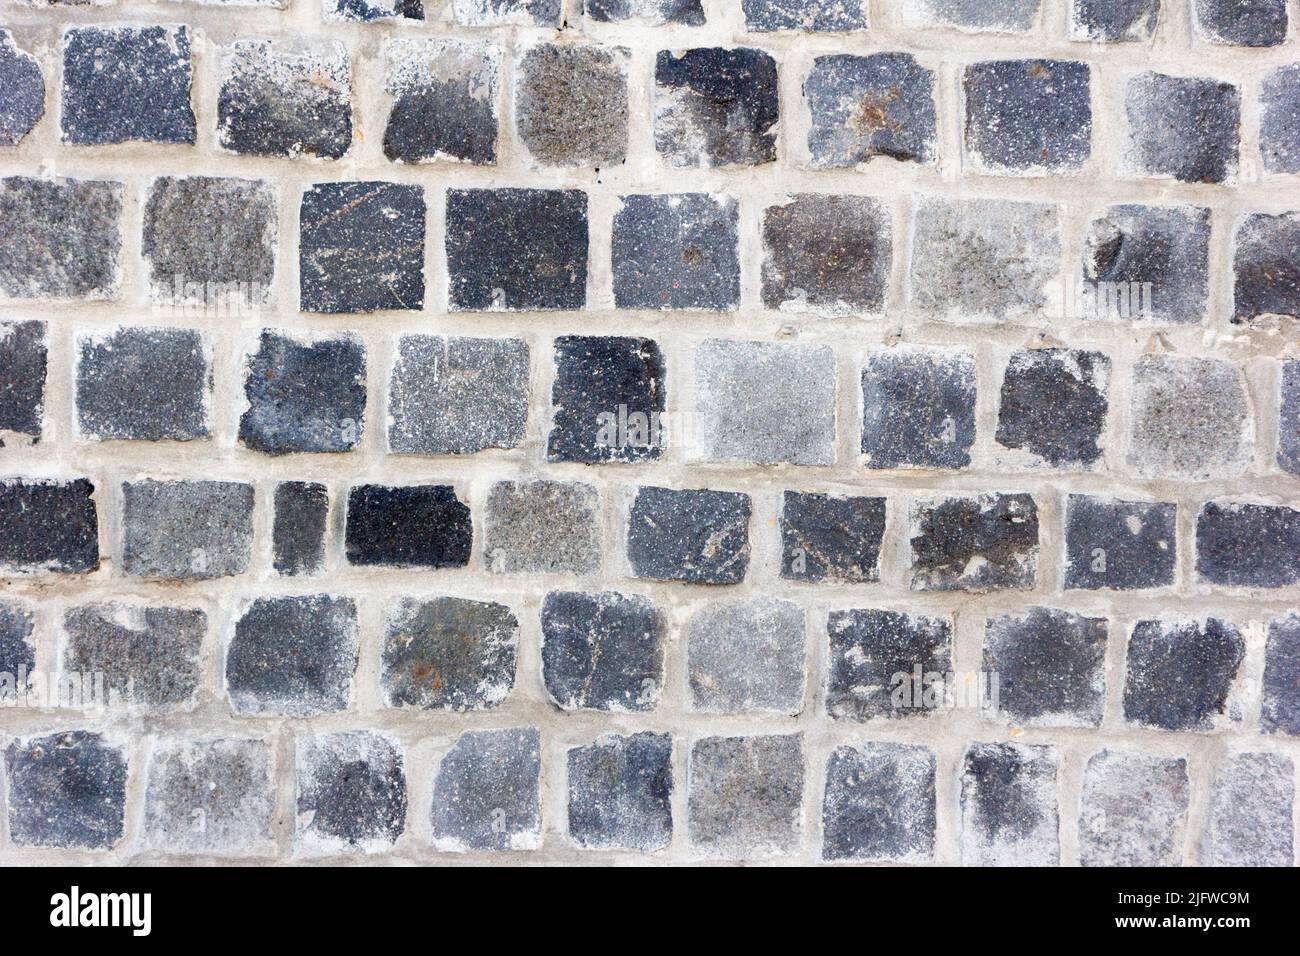 A wall of made of grey bricks Stock Photo